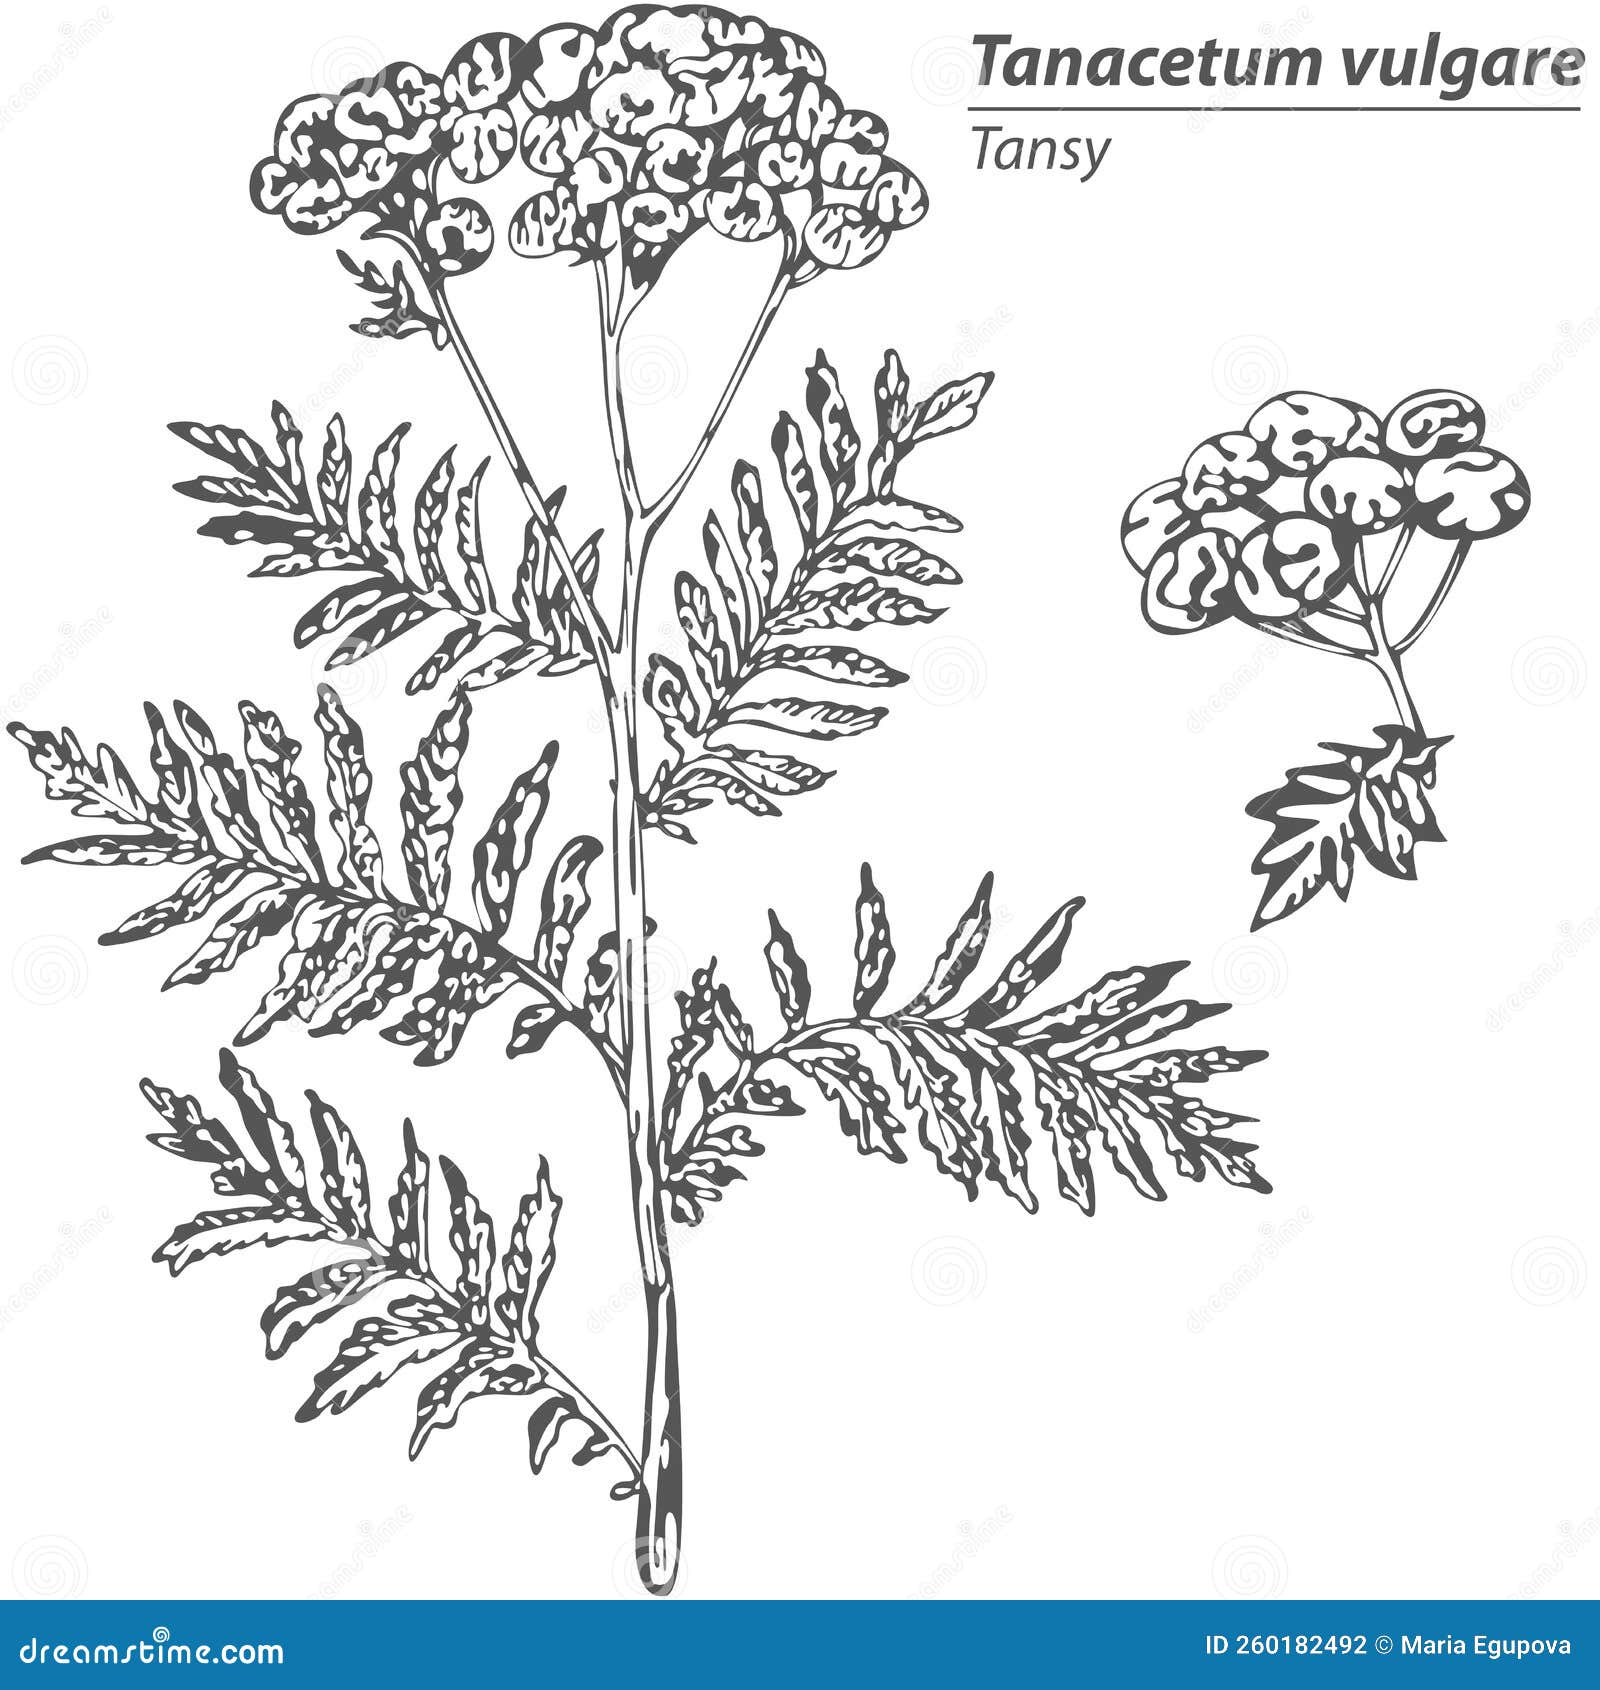 Tanacetum vulgare plant stock vector. Illustration of background ...